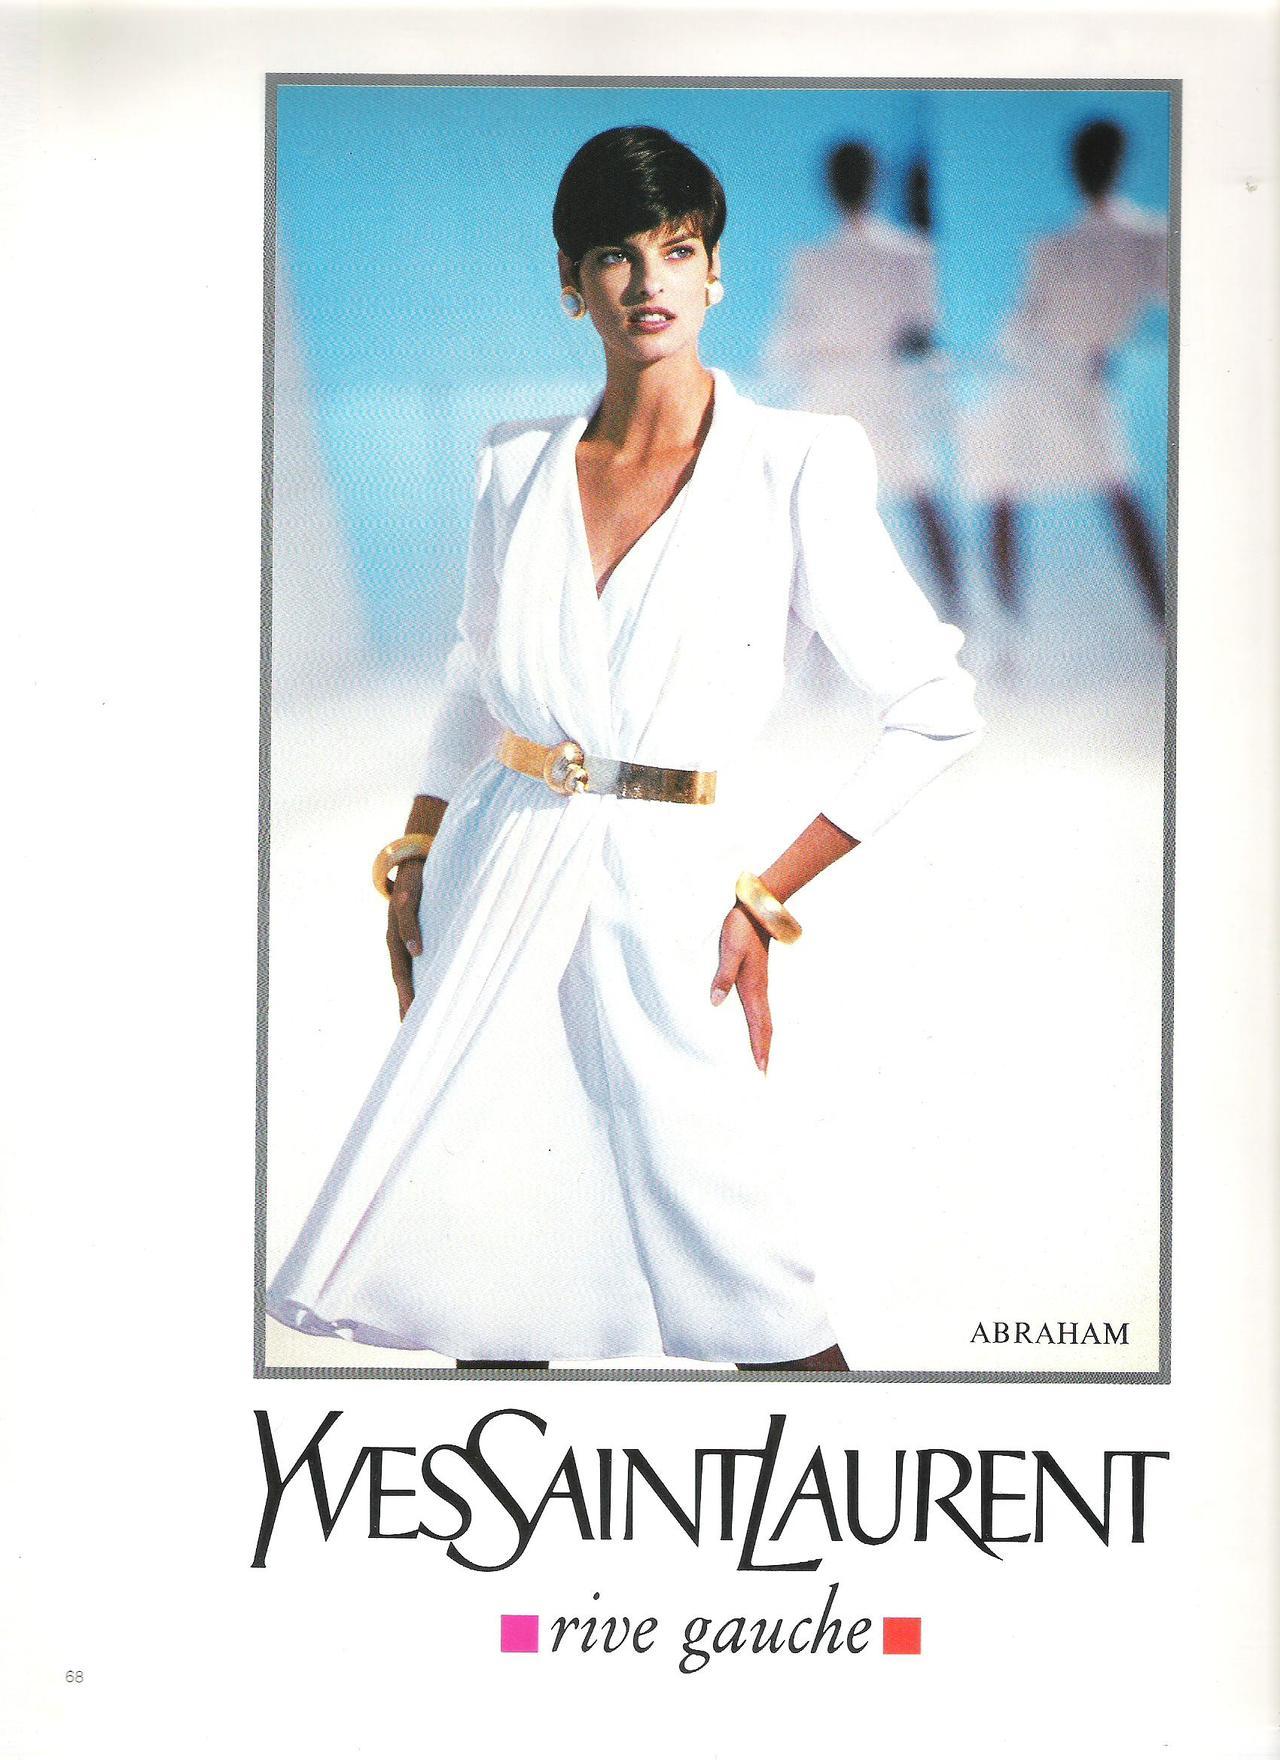 The Gloss Menagerie ca. 80s,90s, lalinda-evangelista: YSL ad 1989